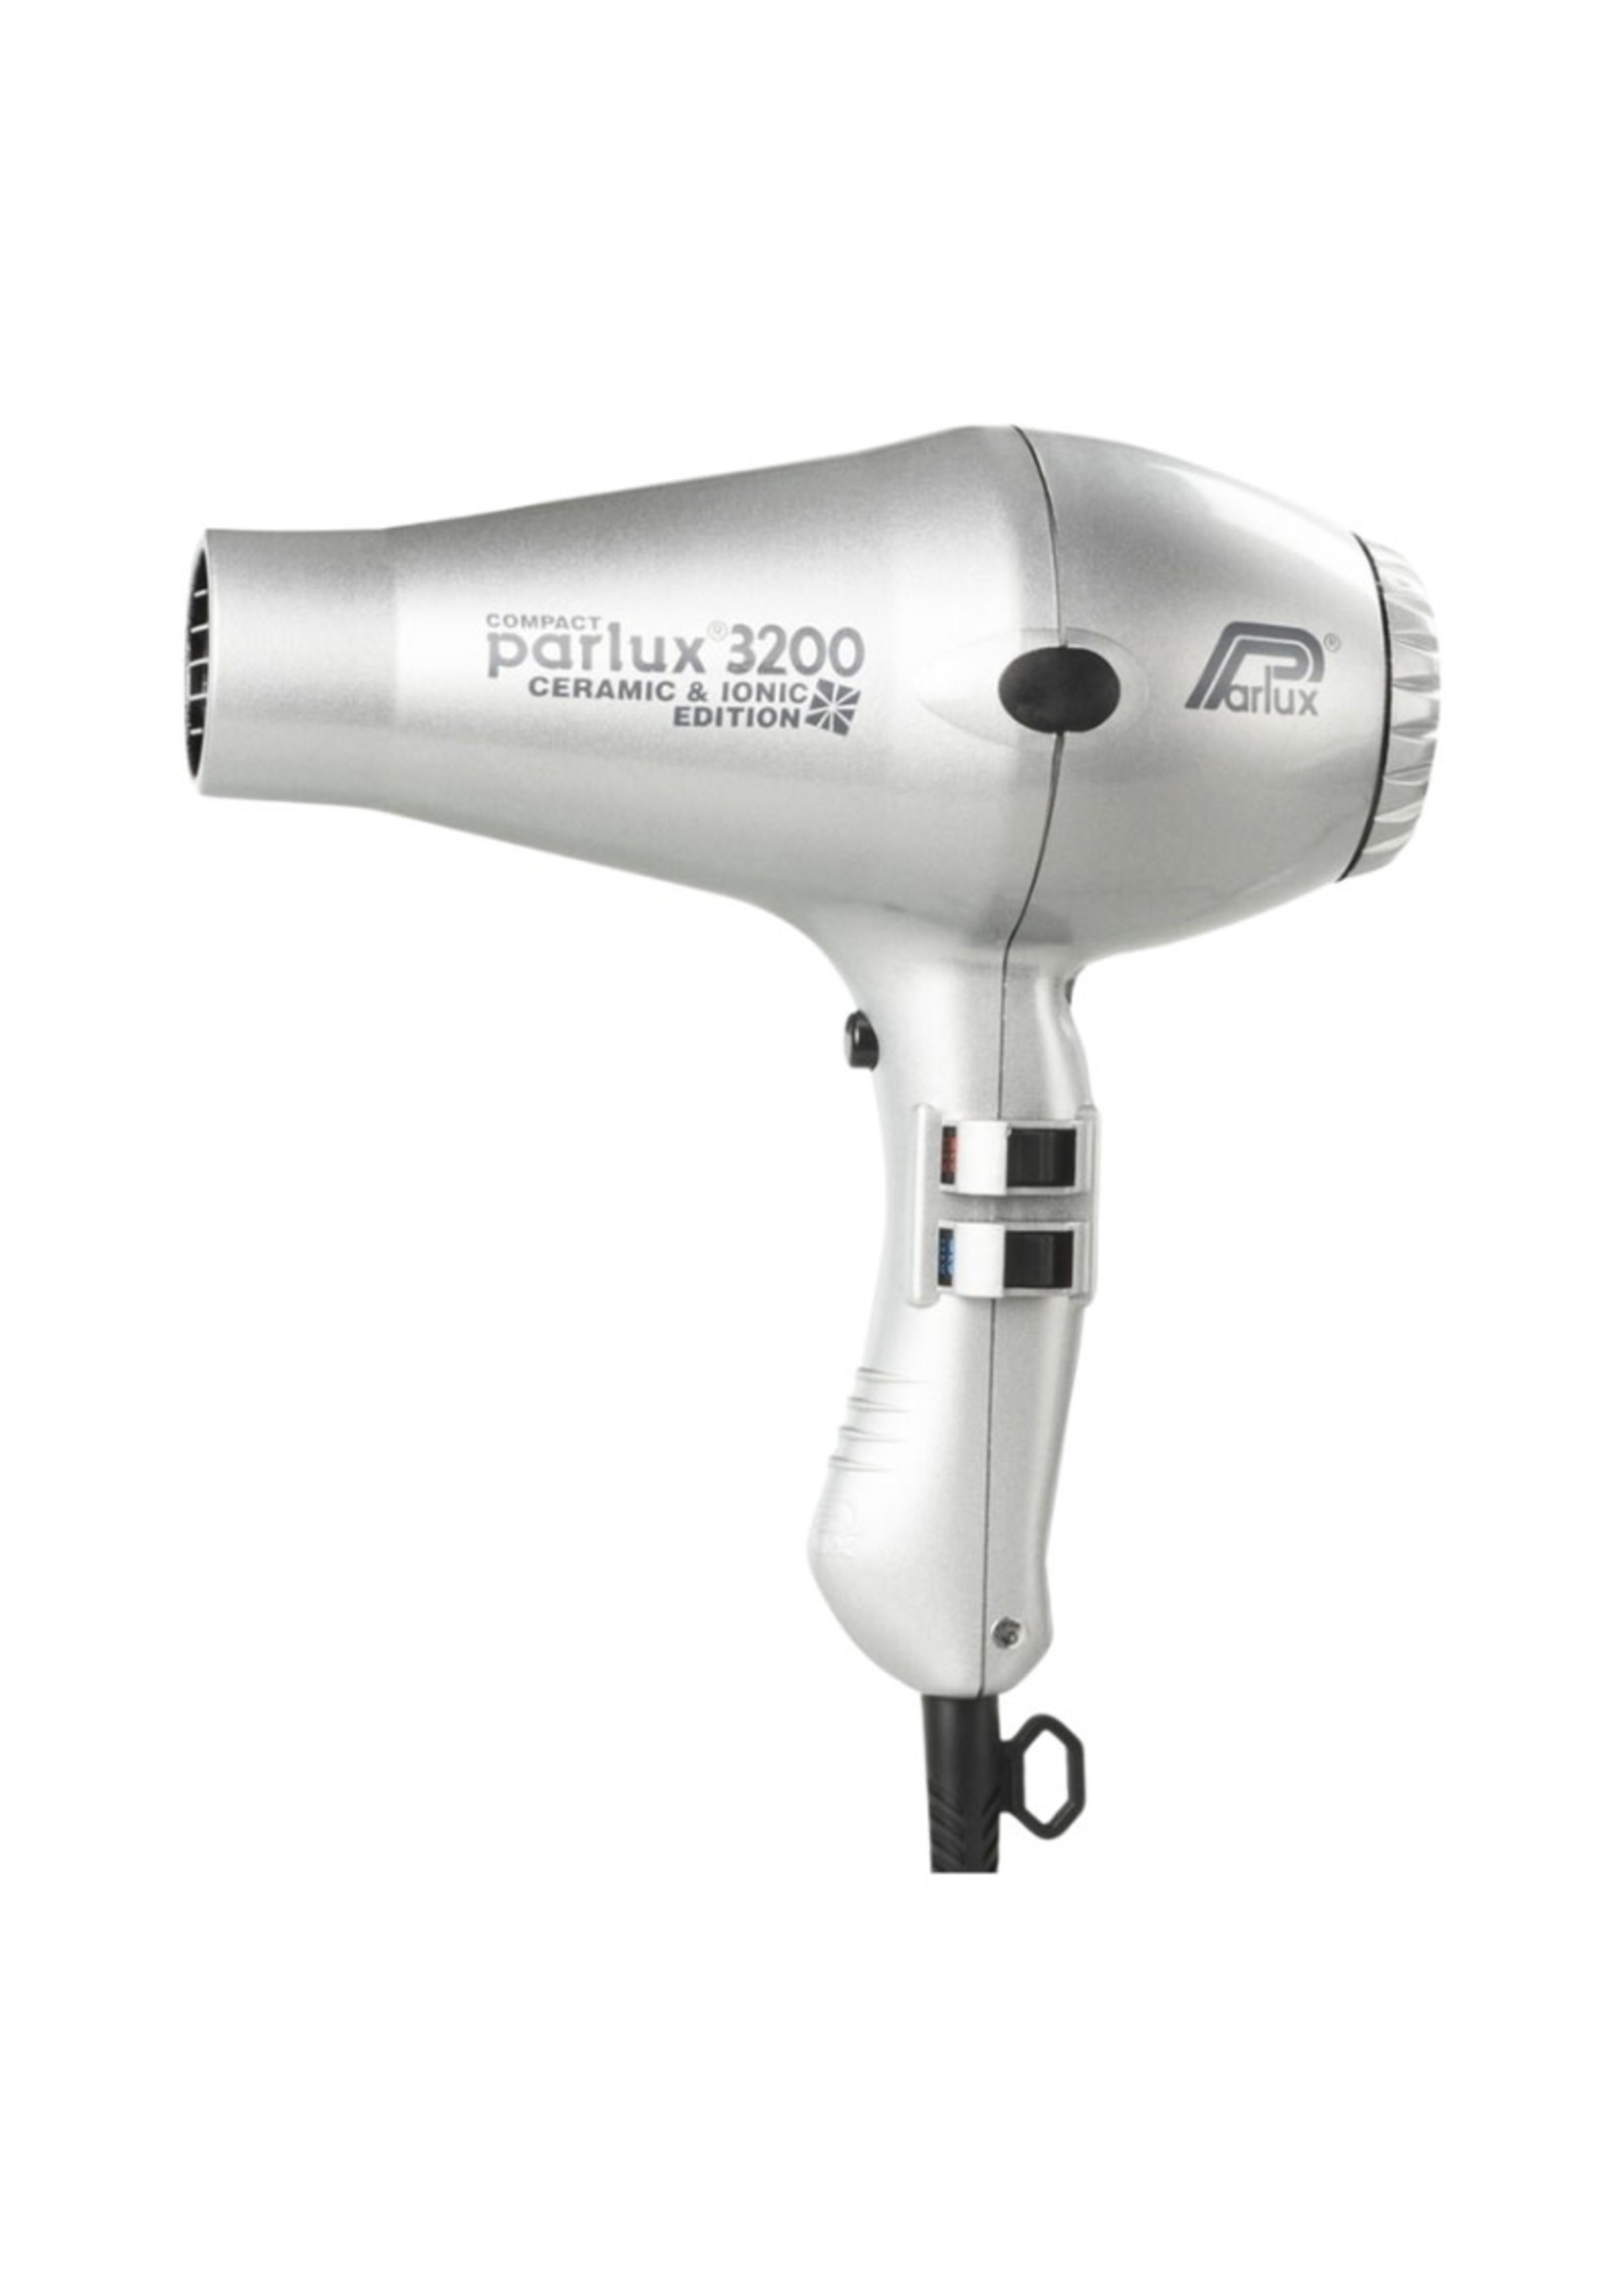 Parlux Parlux 3200 Ceramic & Ionic Hair Dryer 1900W - Silver